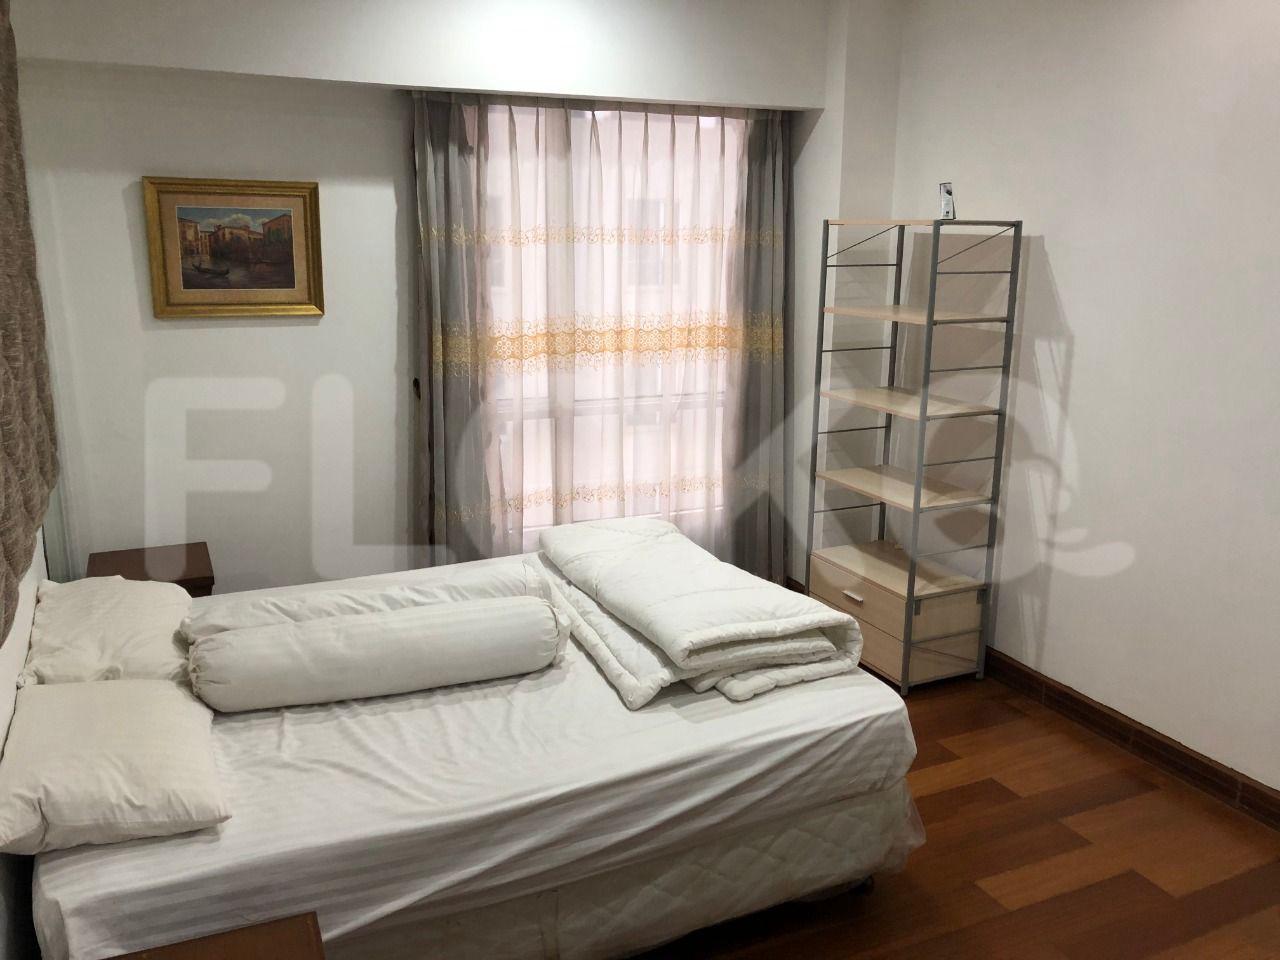 3 Bedroom on 30th Floor fpeefd for Rent in Somerset Permata Berlian Residence